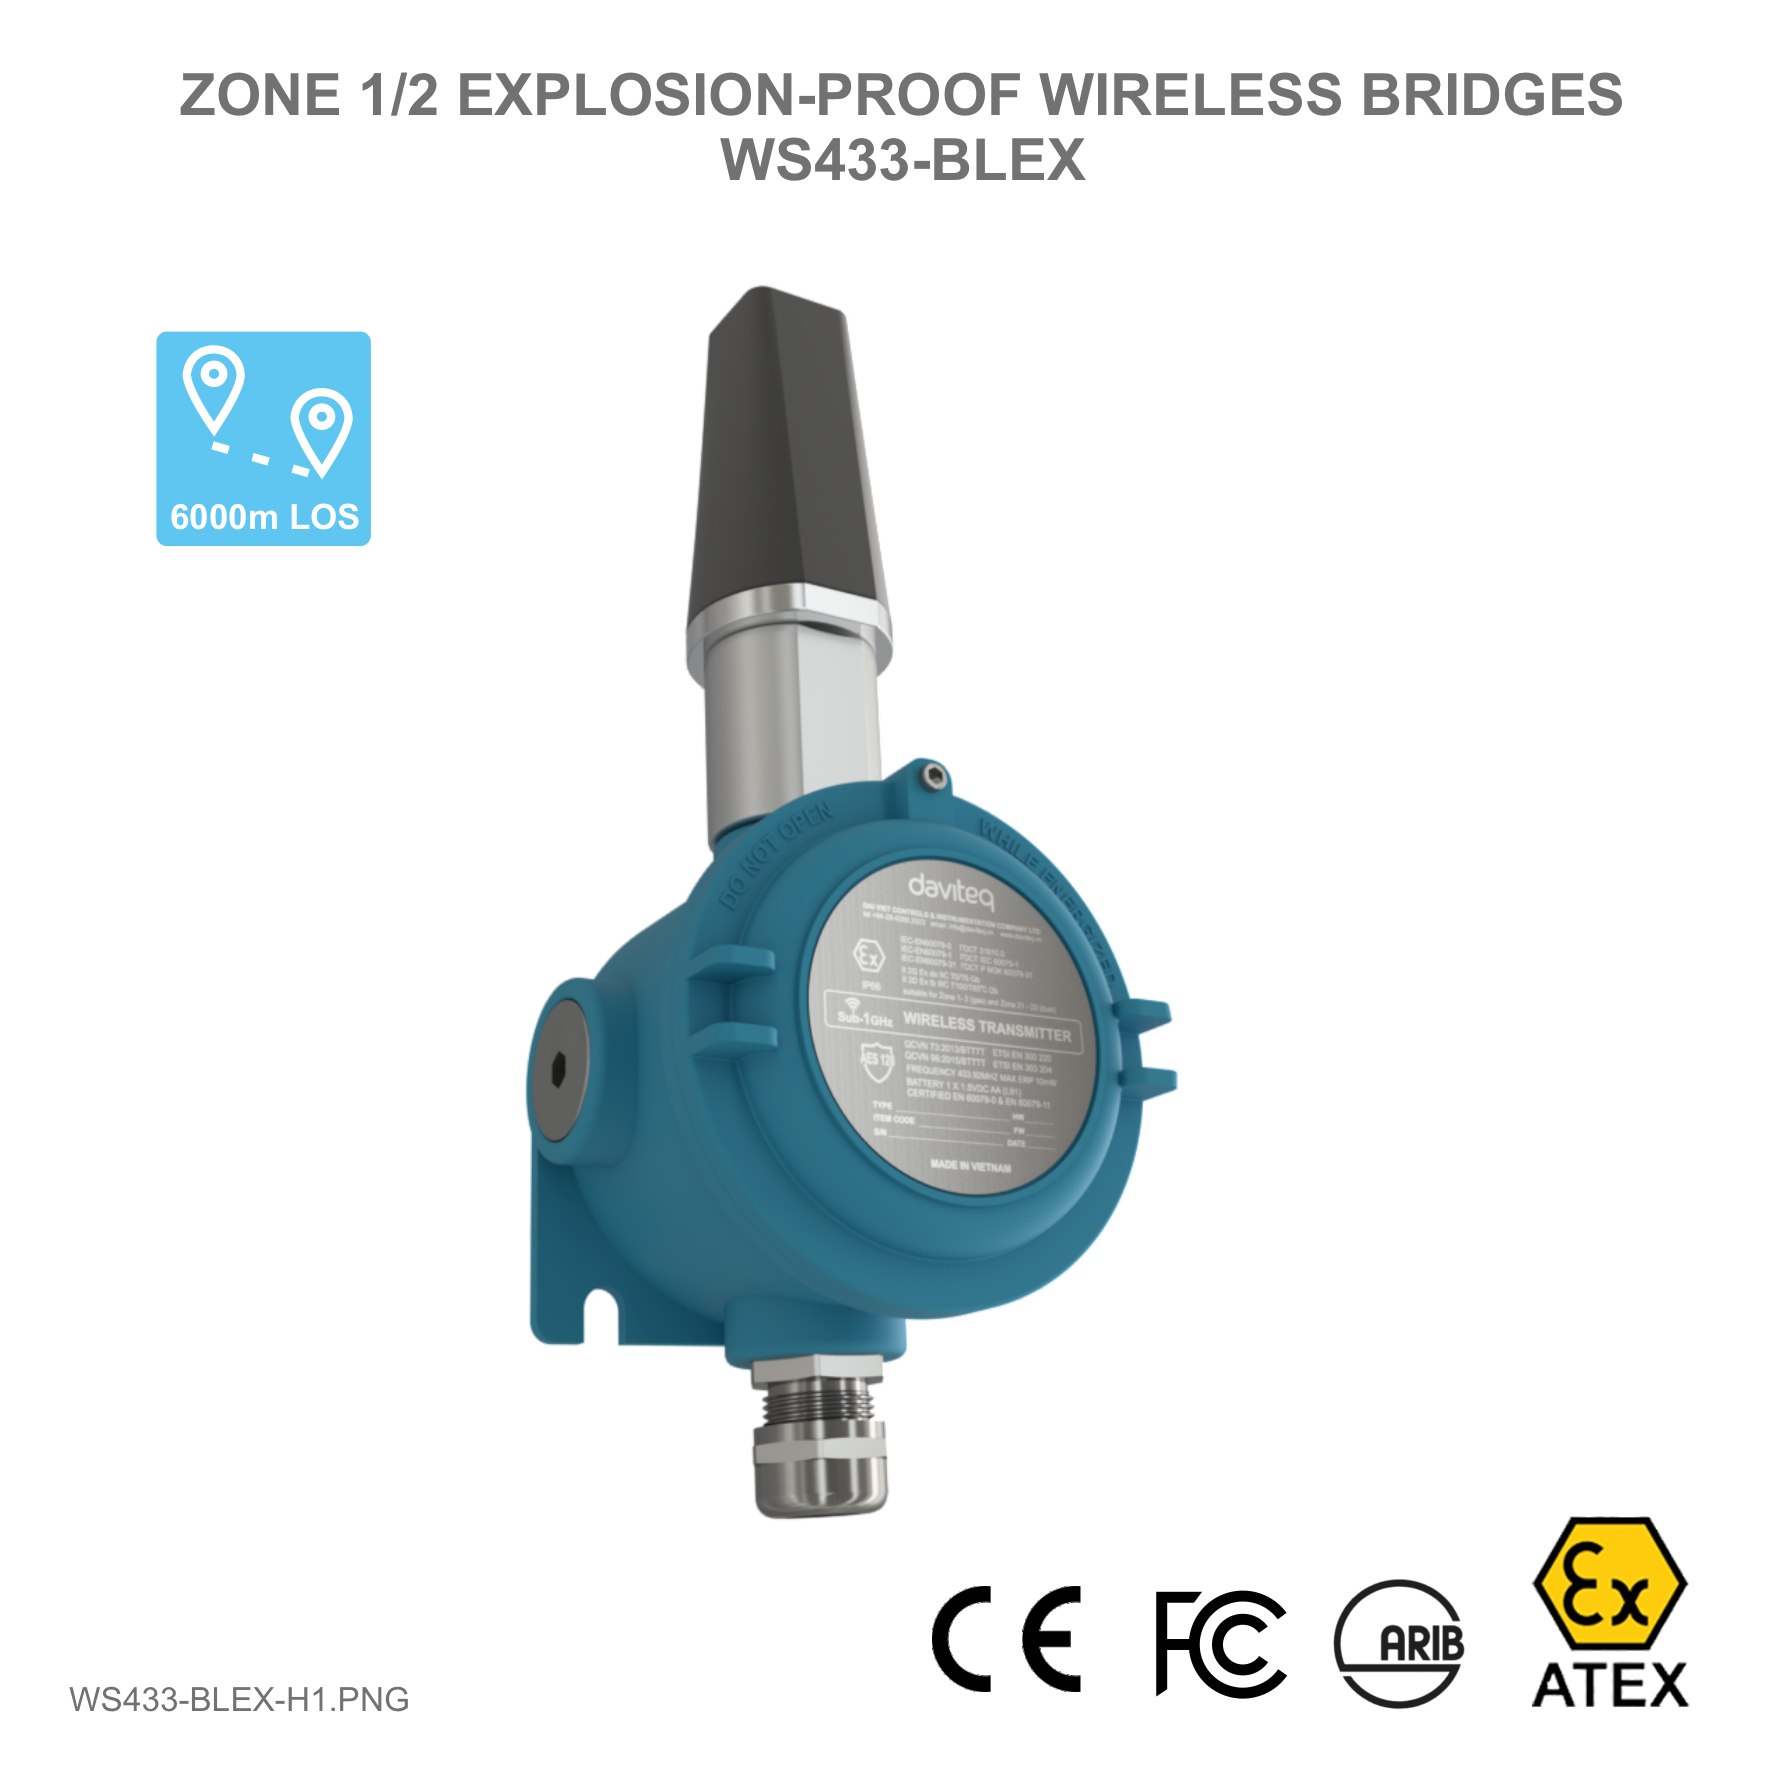 Sub-Ghz Ex d Wireless Bridges